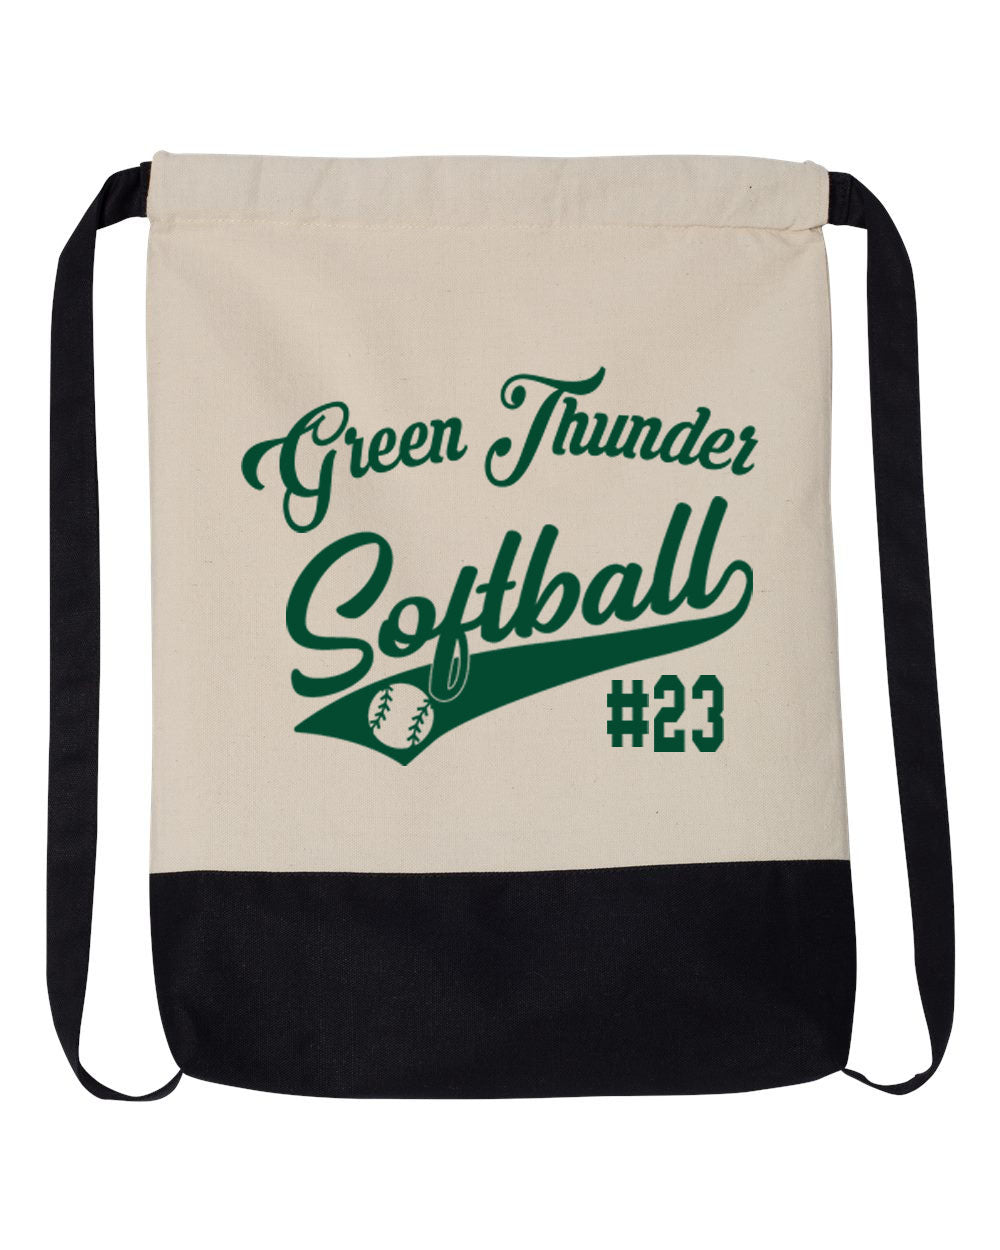 Green Thunder Design 2 Drawstring Bag